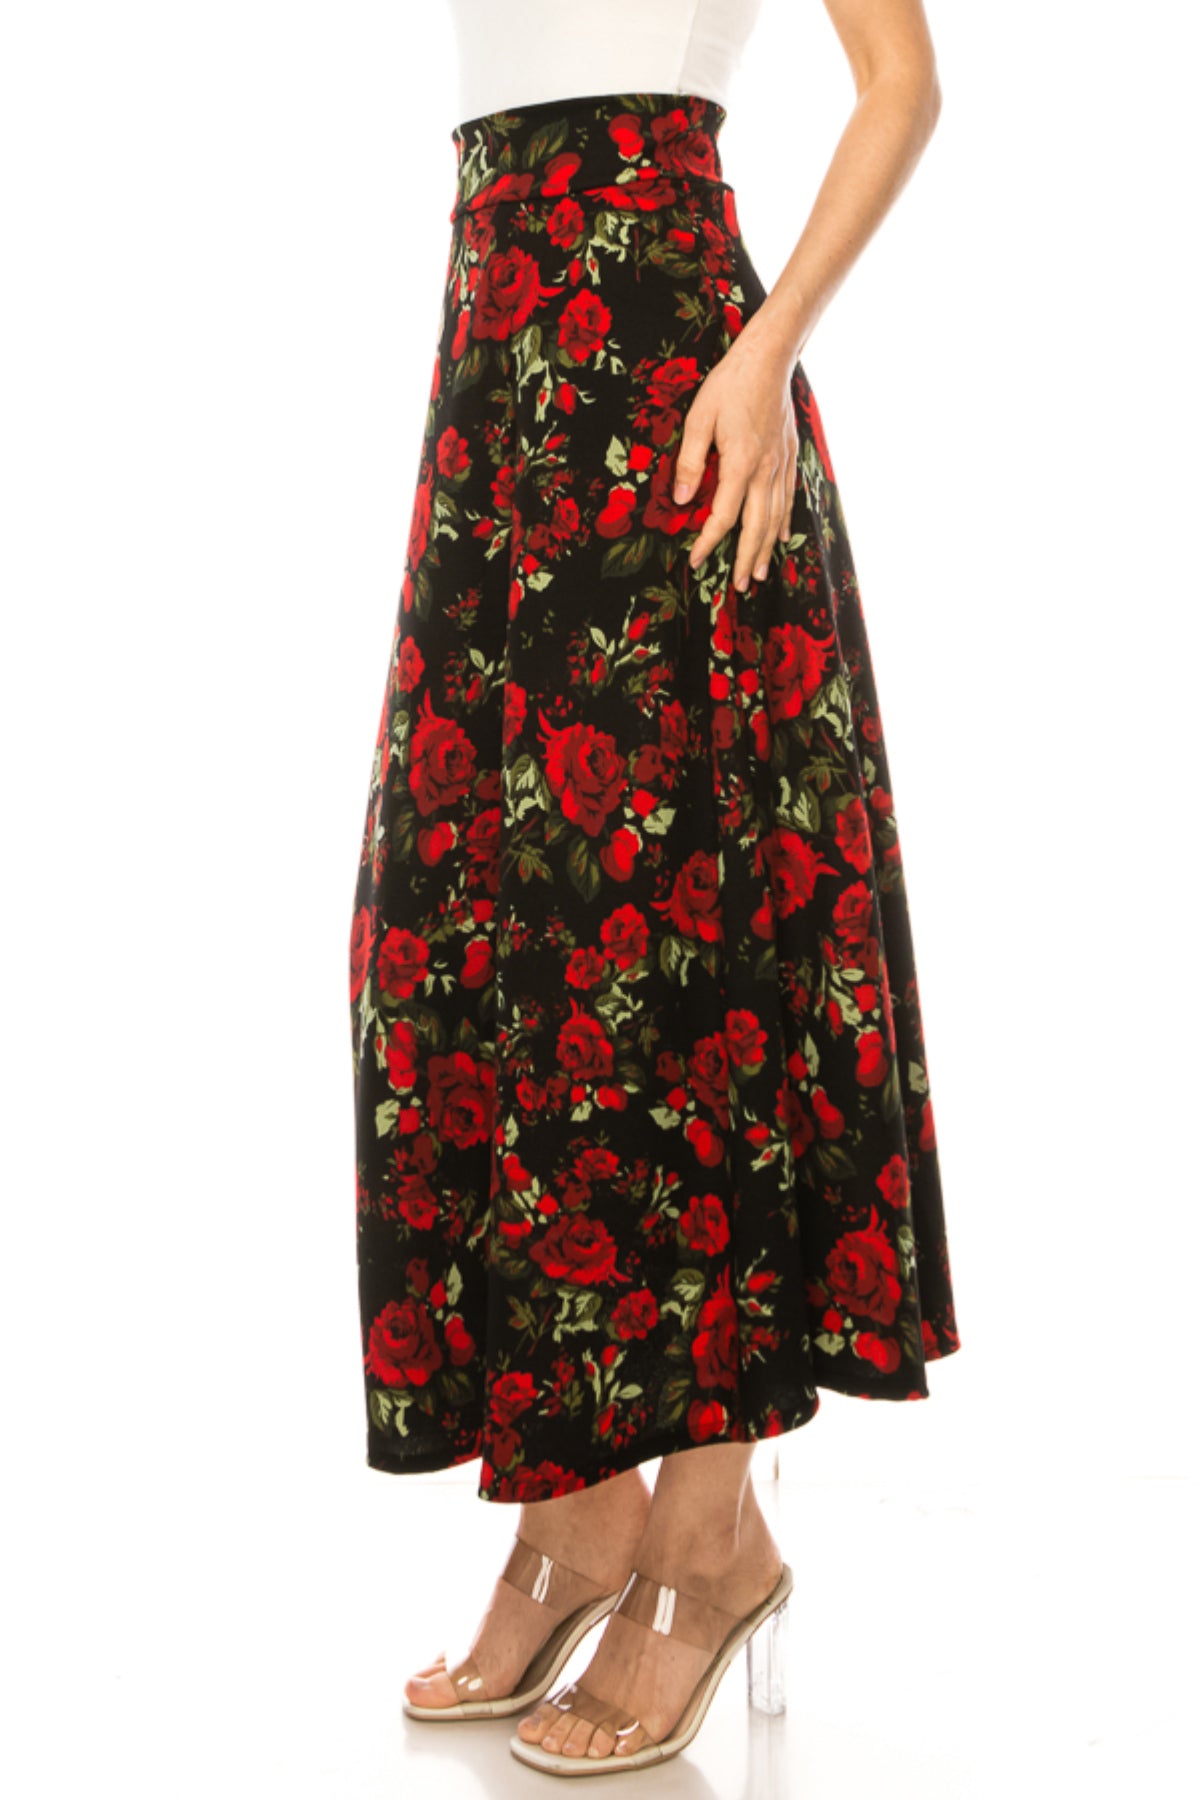 Women's Casual Floral Print A-Line Long Skirt